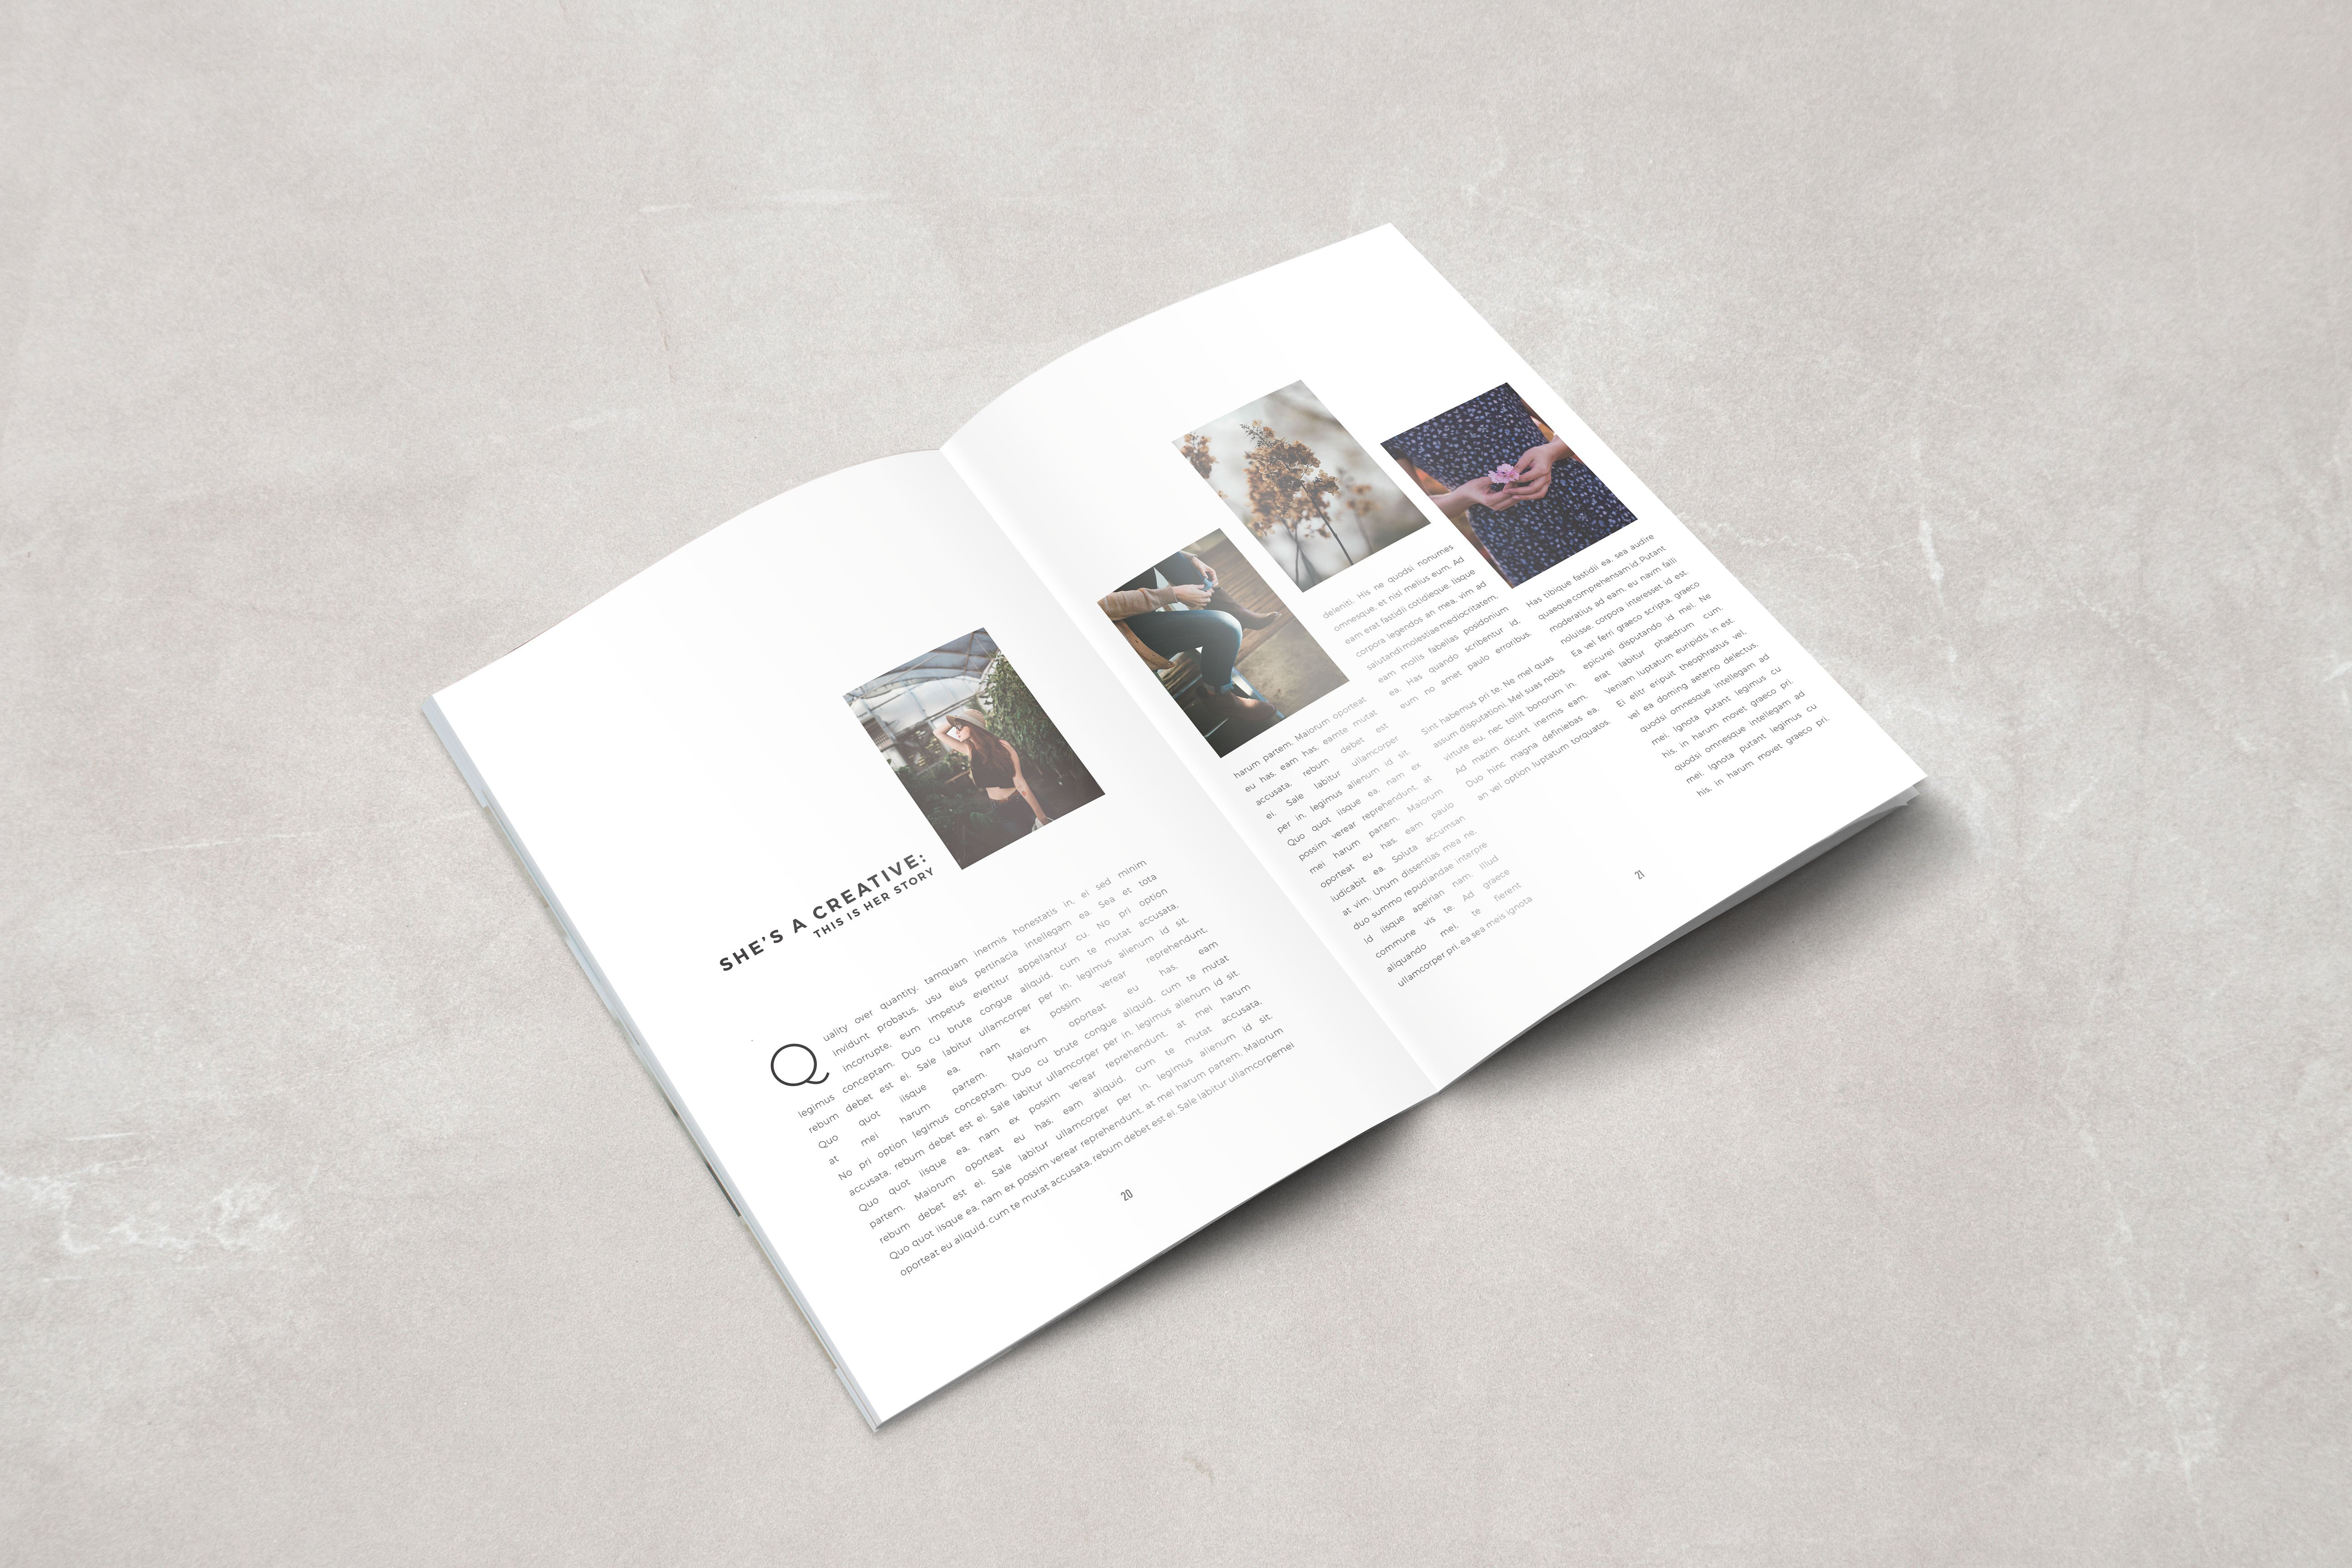 现代简约版式画册杂志设计模板 Graphature-Maga